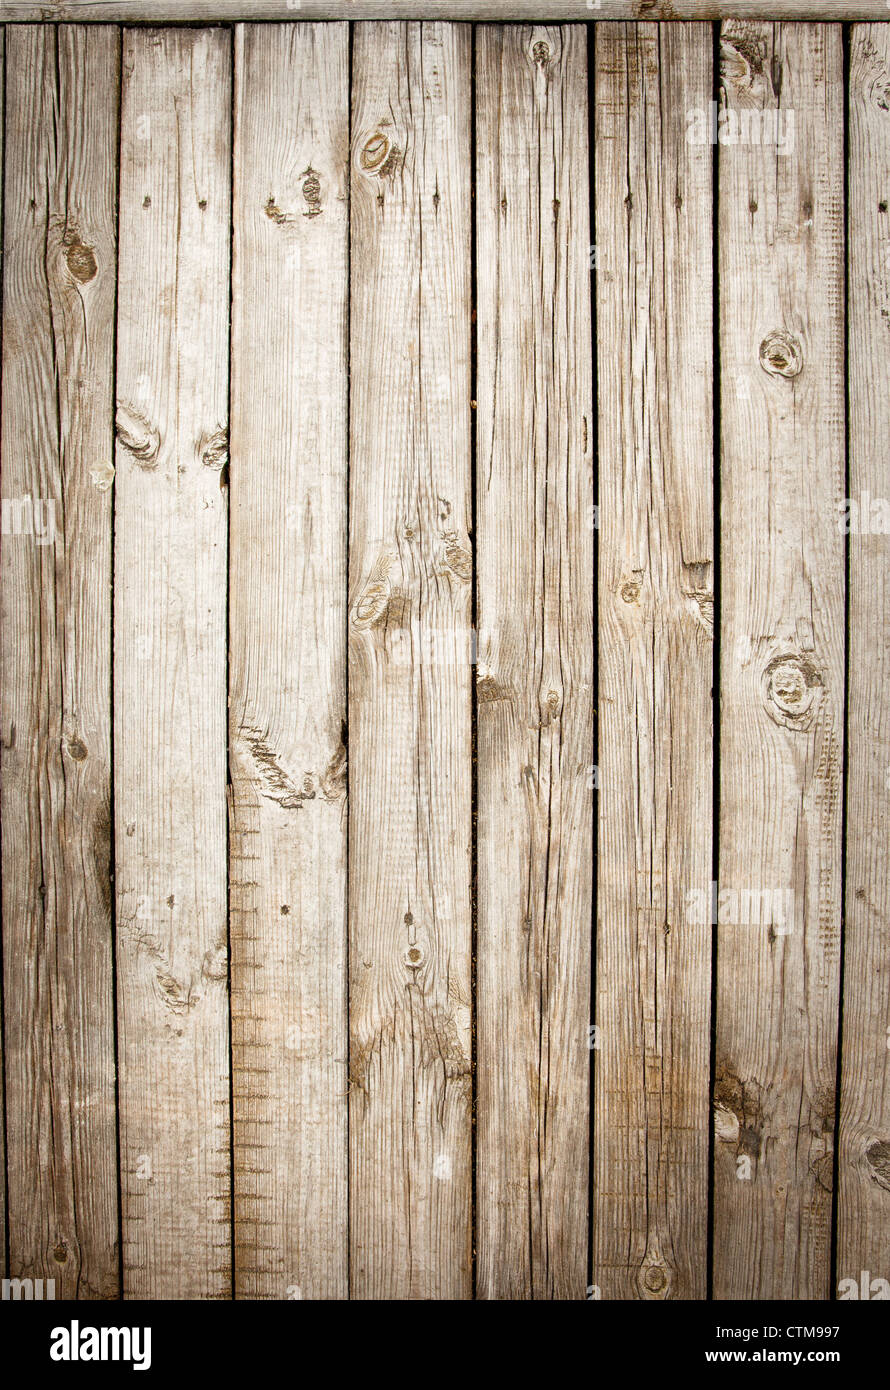 Close up shot of old wooden fence Banque D'Images